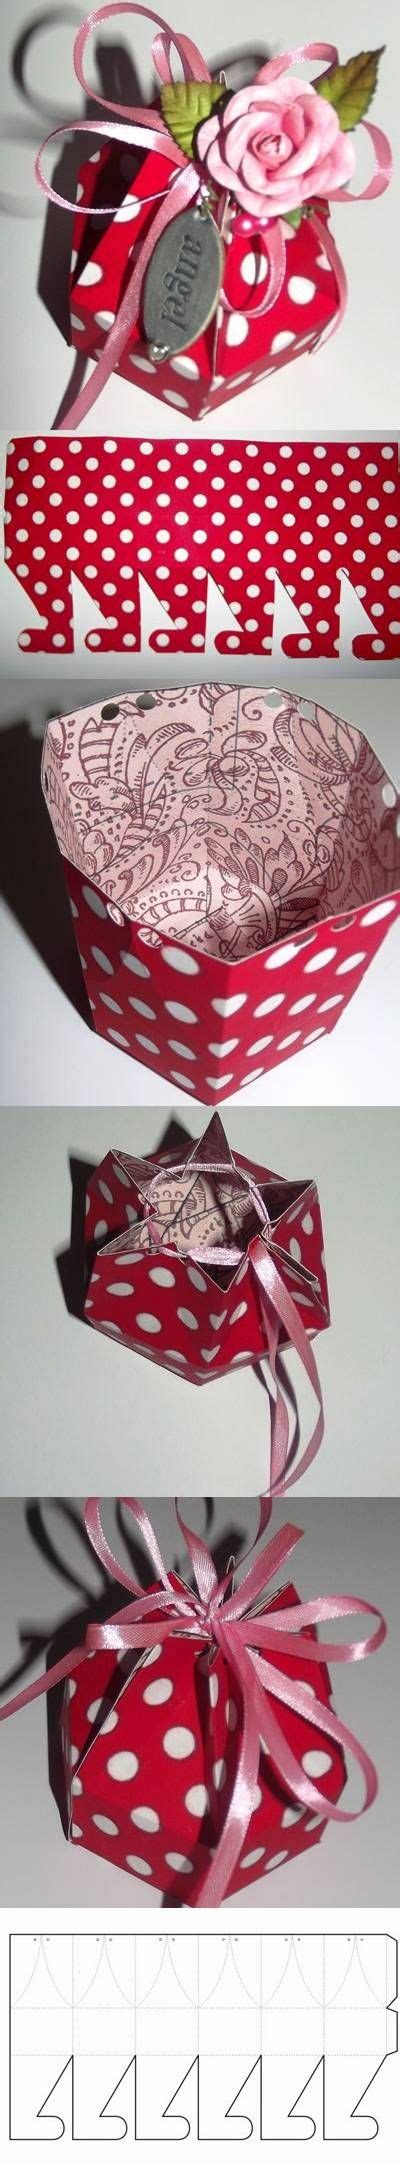 Other Easy Creative Ideas Gift Wrap Box Diy Gift Box Diy Box Gift Boxes Paper Box Diy